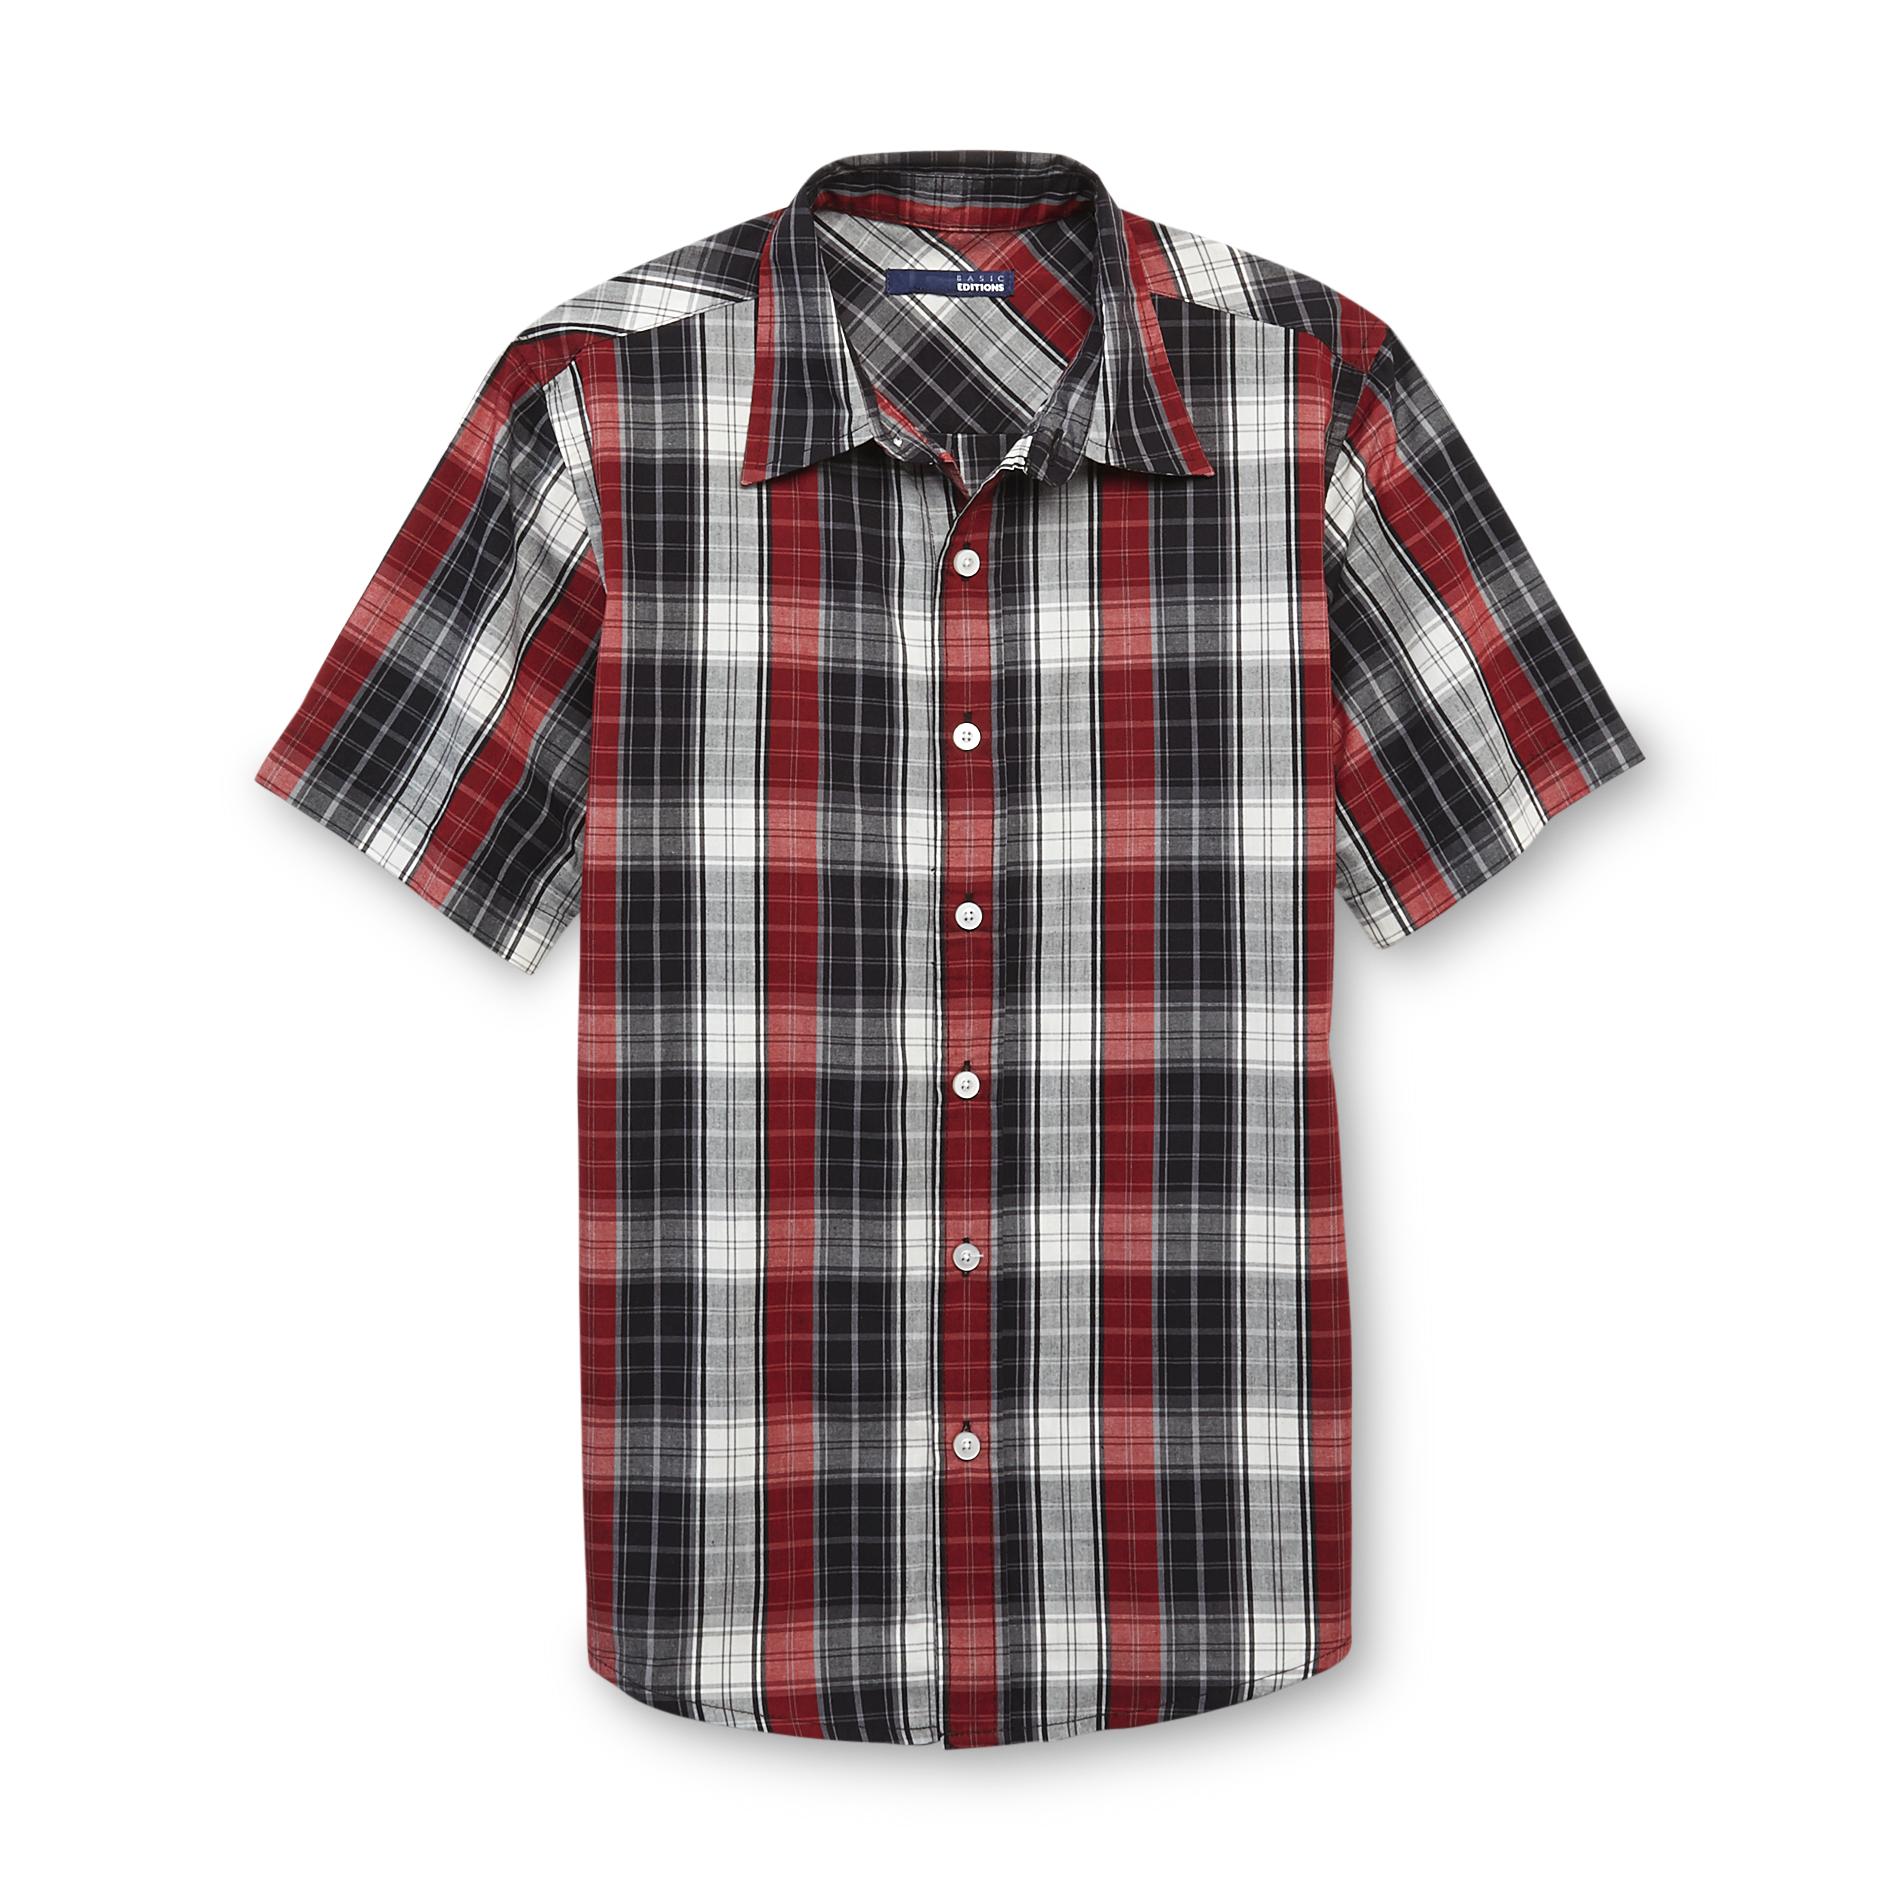 Basic Editions Boy's Short-Sleeve Shirt - Plaid